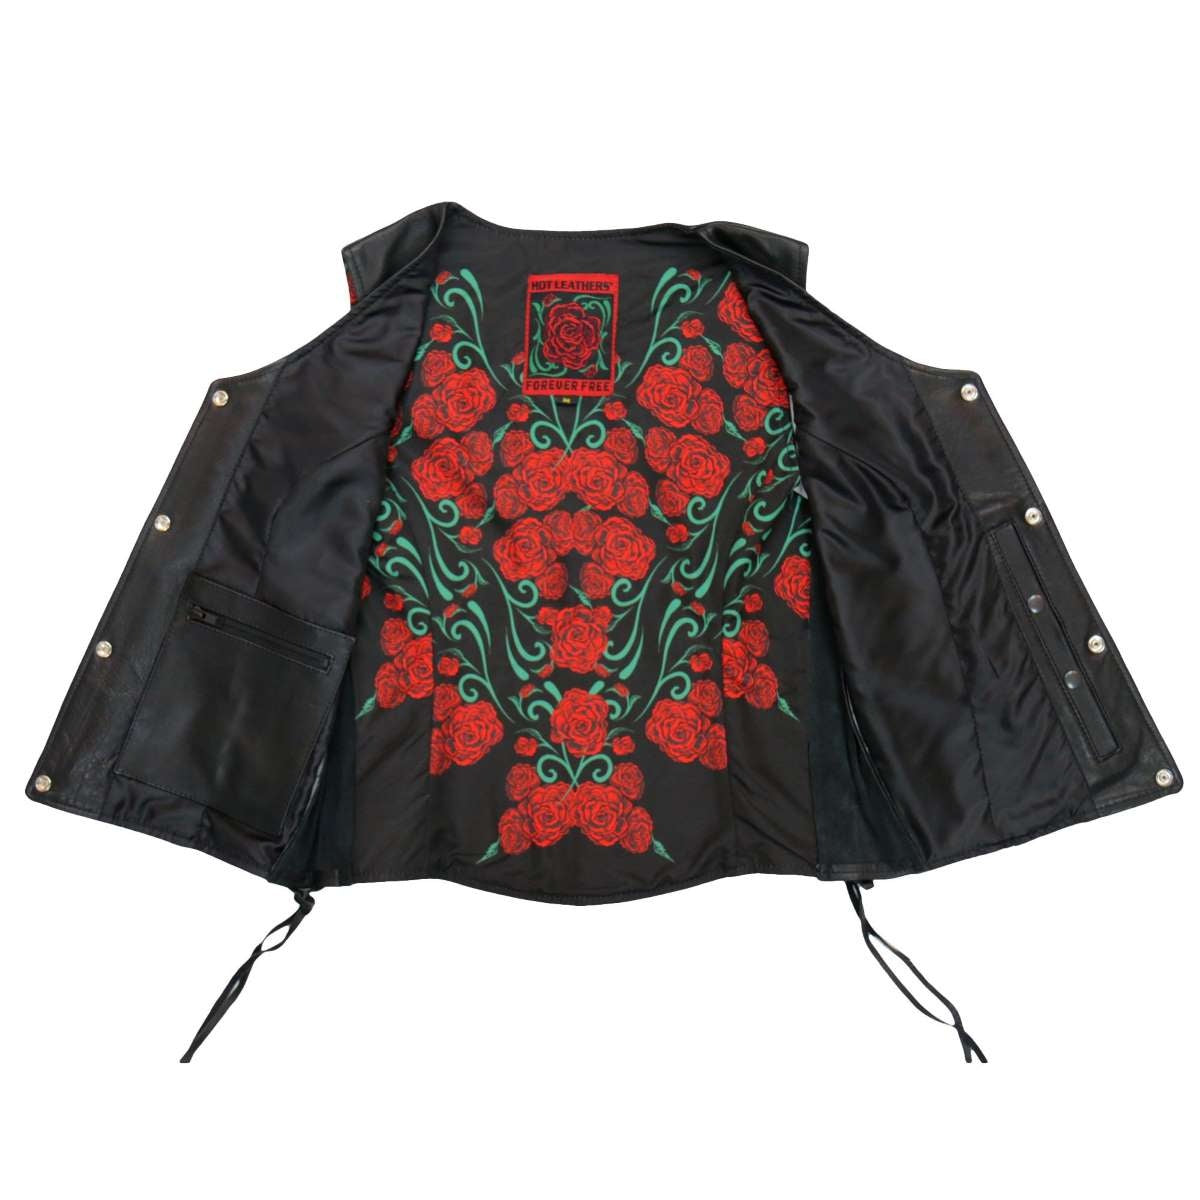 Hot Leathers VSL1019 Ladies 'Red Rose' Lined Black Leather MC Vest